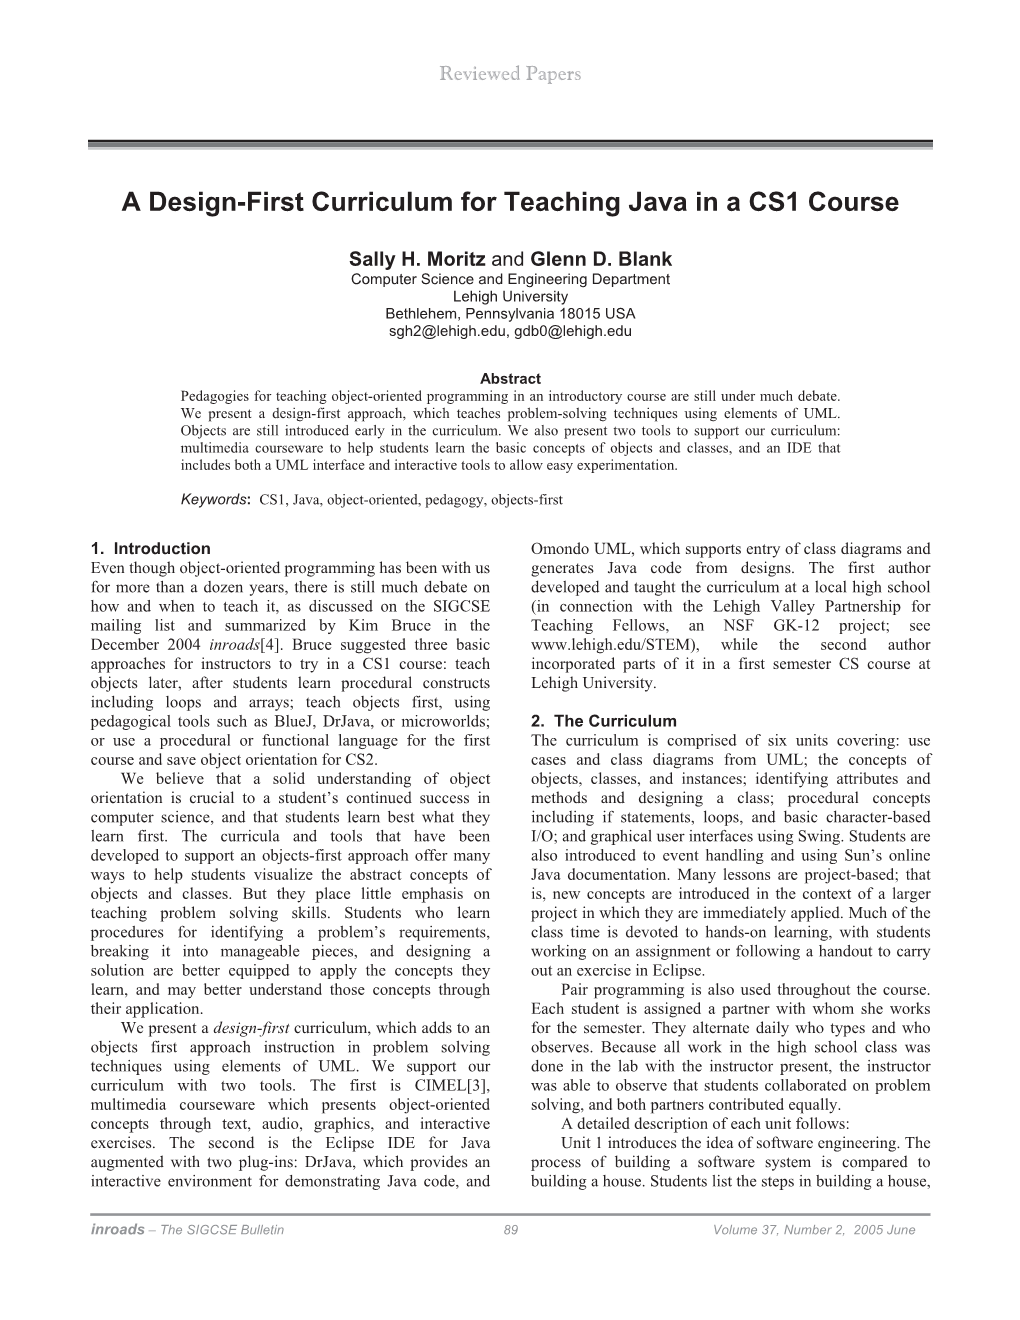 A Design-First Curriculum for Teaching Java in a CS1 Course